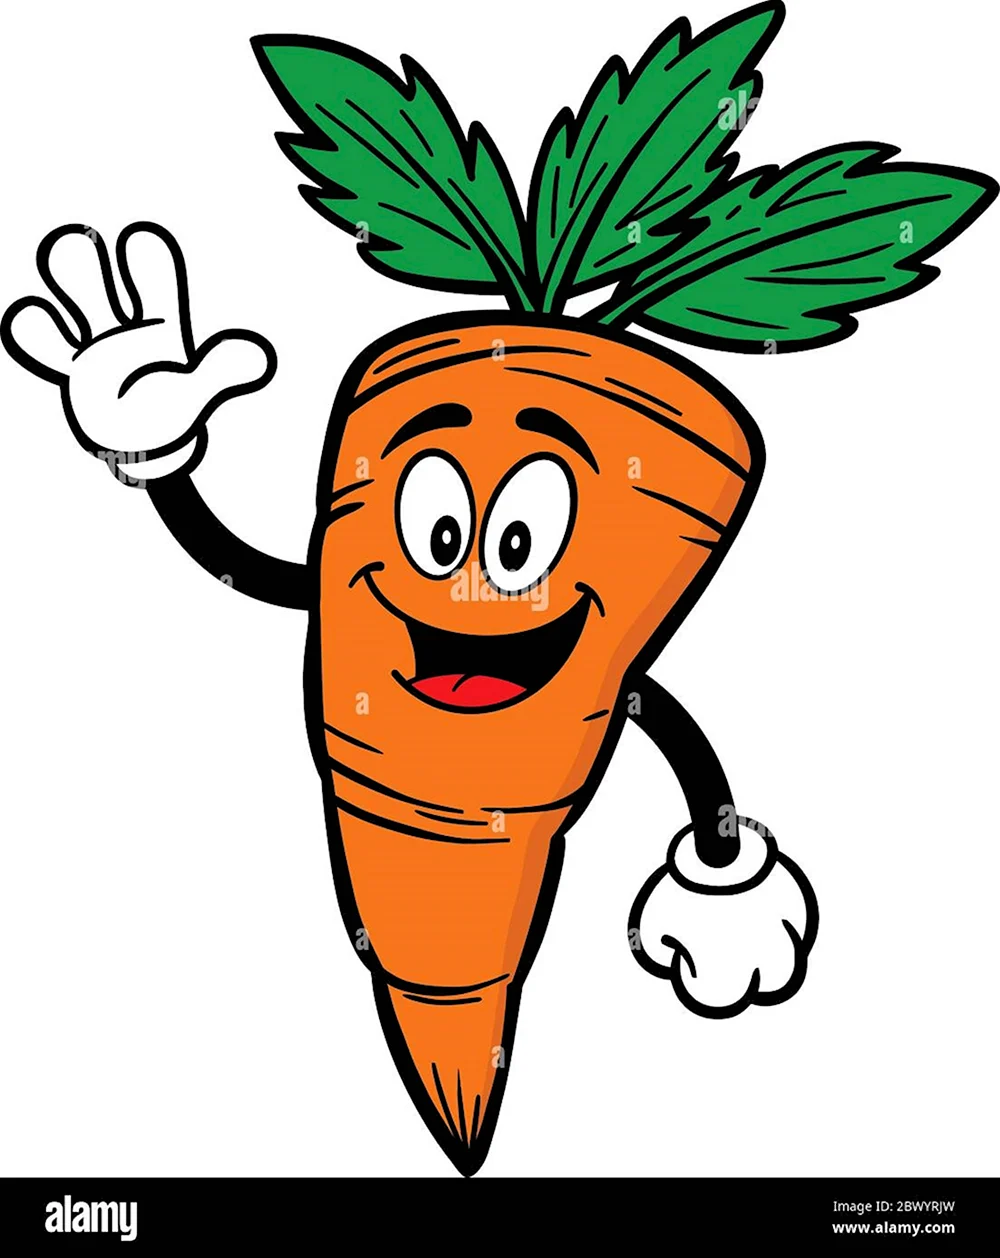 Веселая морковка